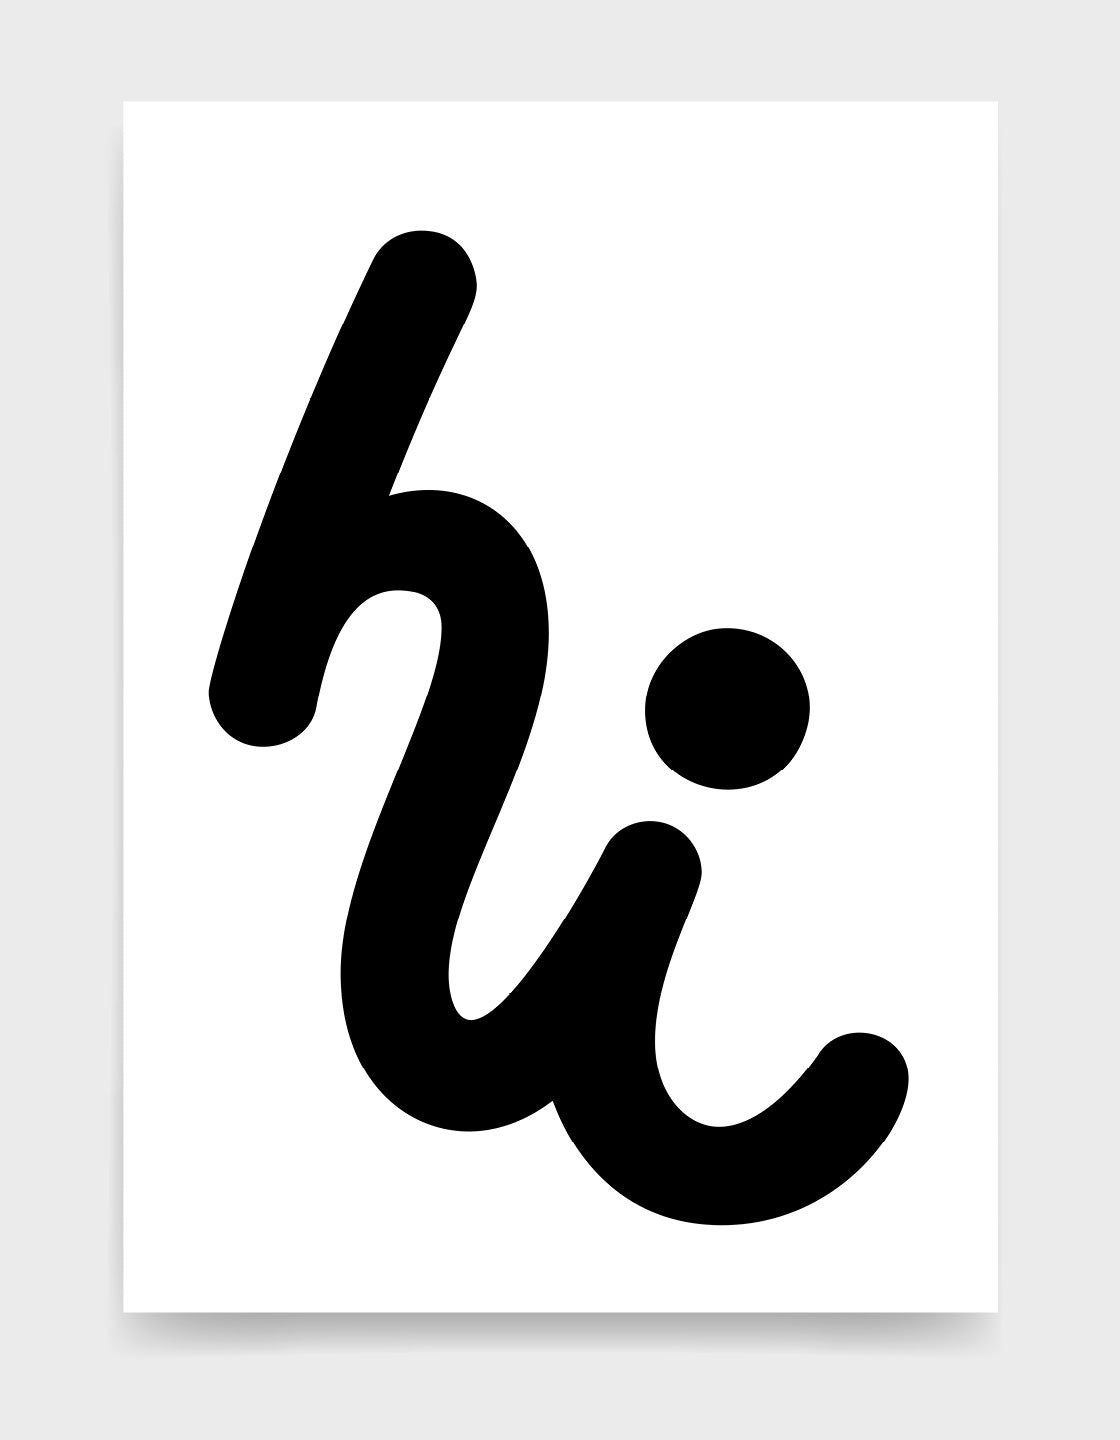 monochrome typography print - Hi in cursive text